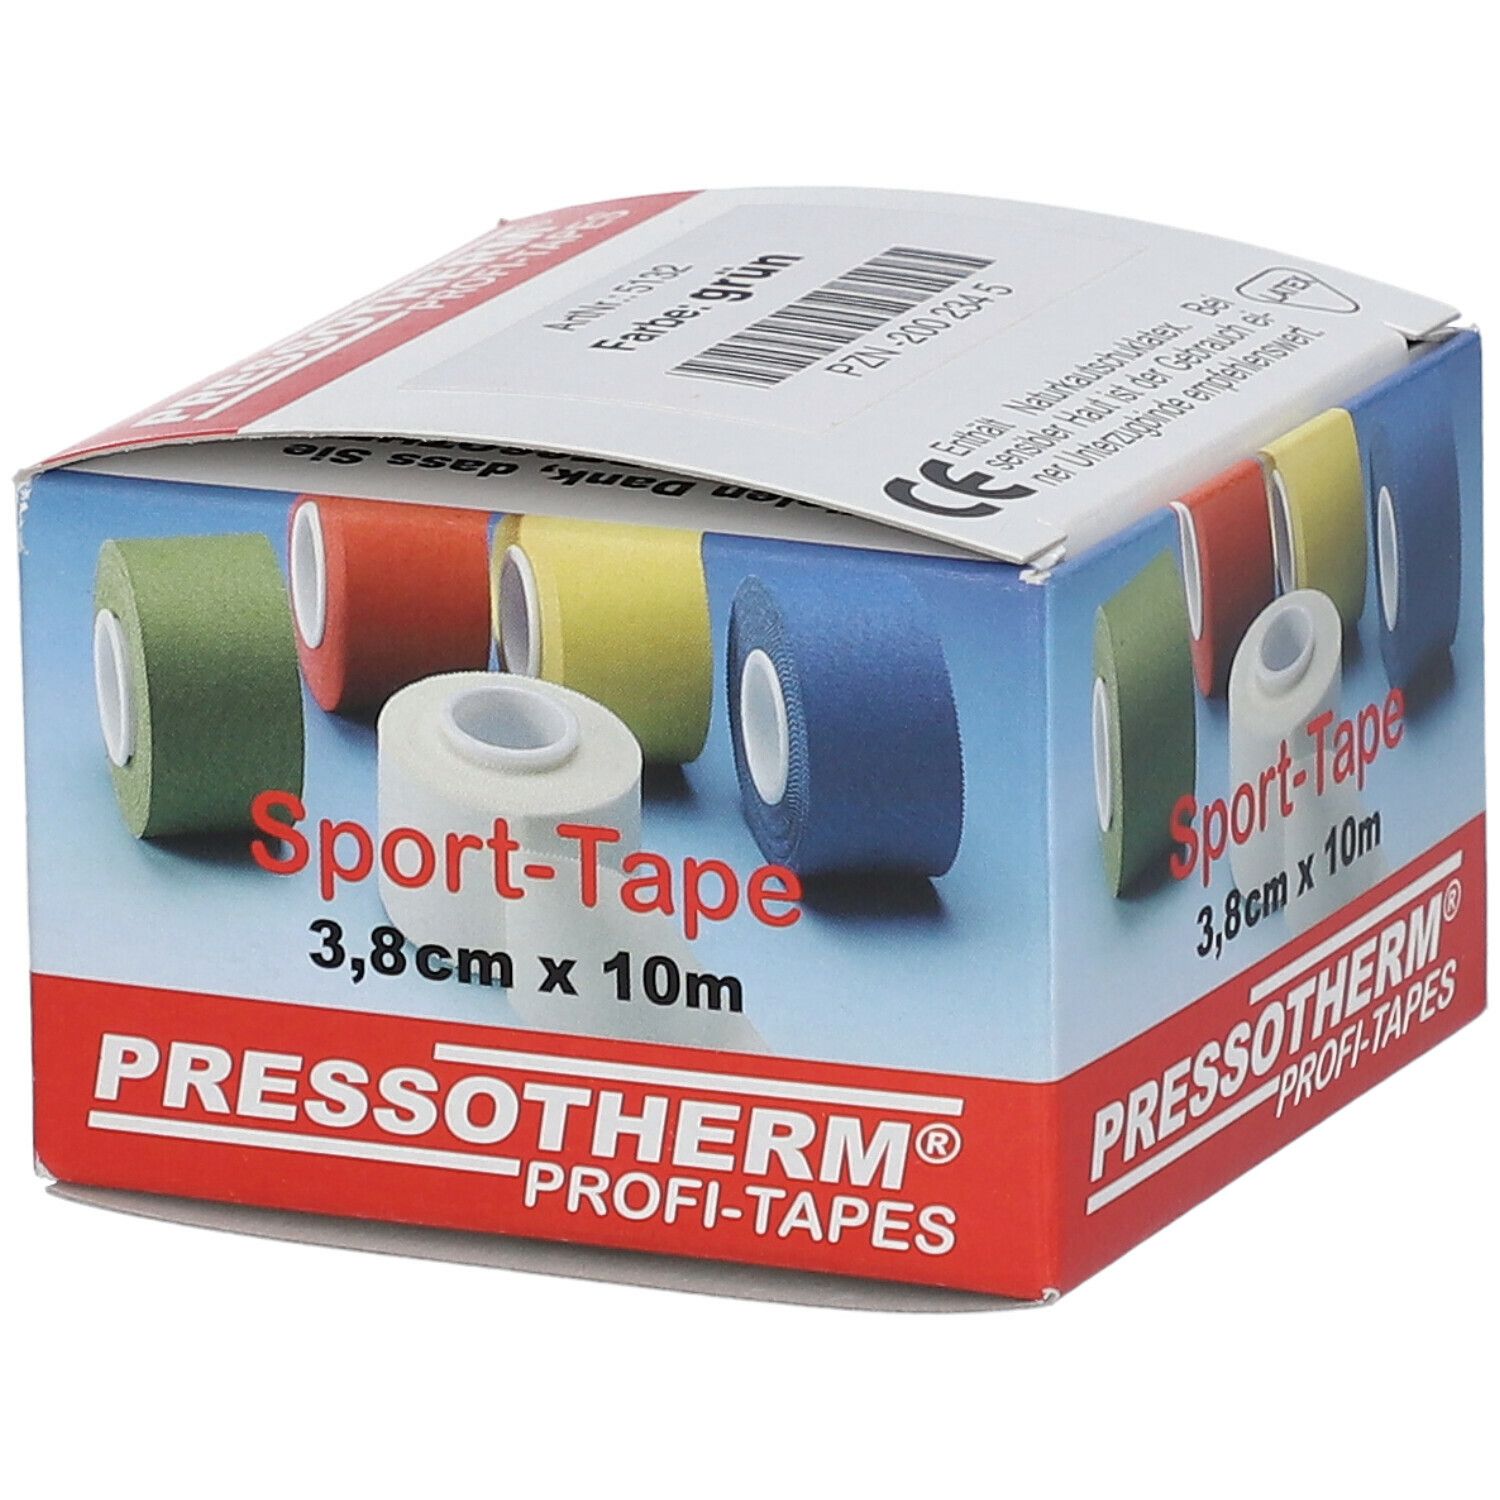 Pressotherm® Sport-Tape 3,8 cm x 10 m grün